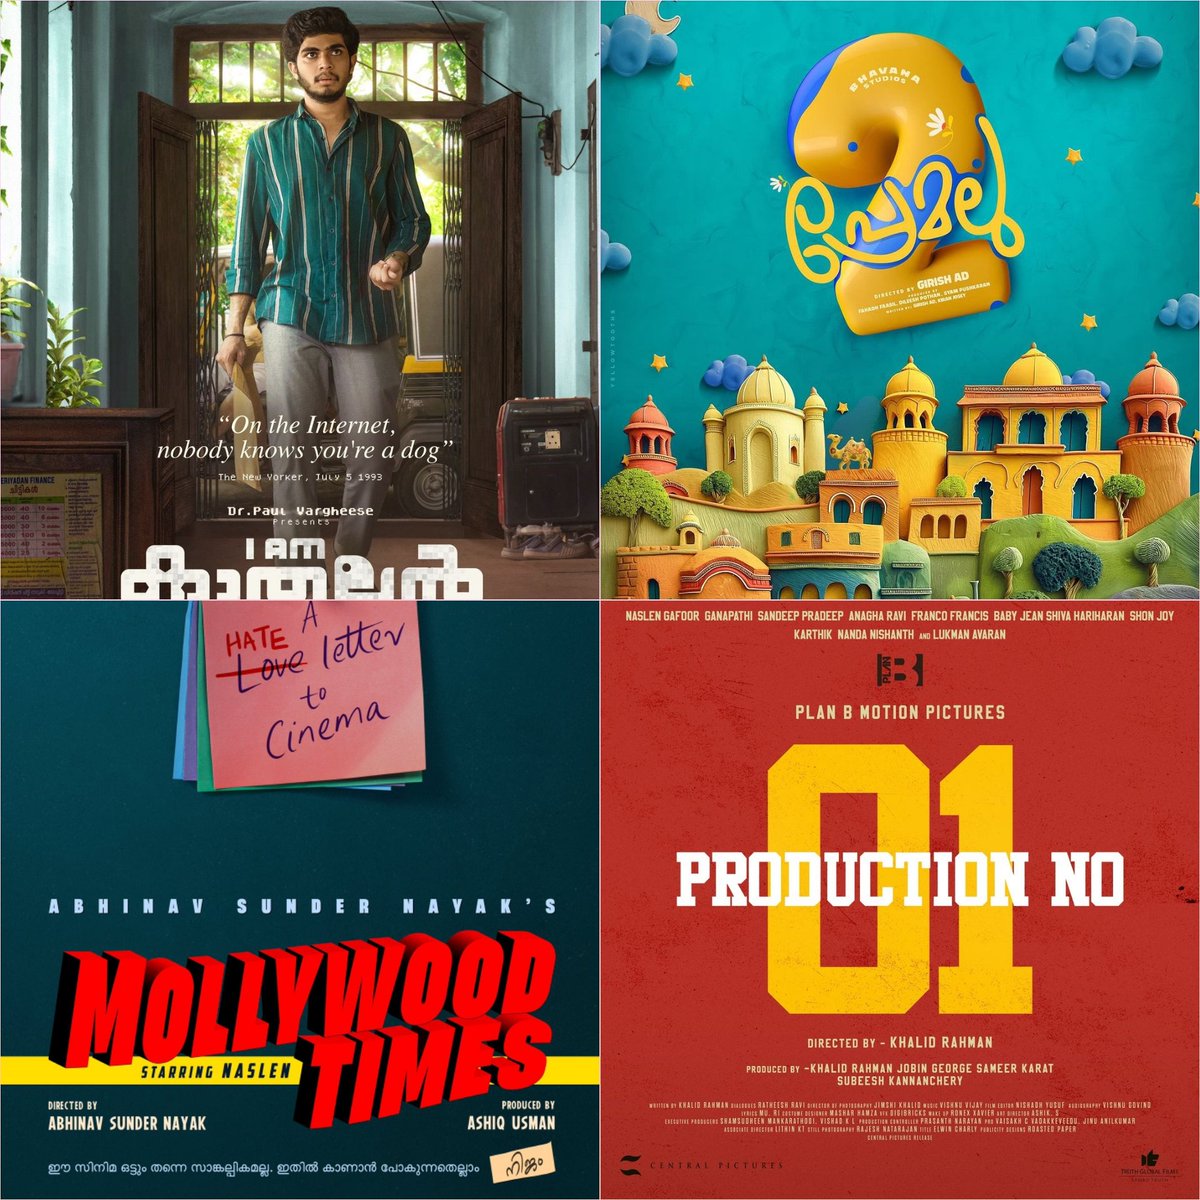 #Naslen Lineups

#IAmKadhalan (June Release)
#Premalu2 
#MollywoodTimes 
Movie with #KhalidRahman 

Promising Star 💥